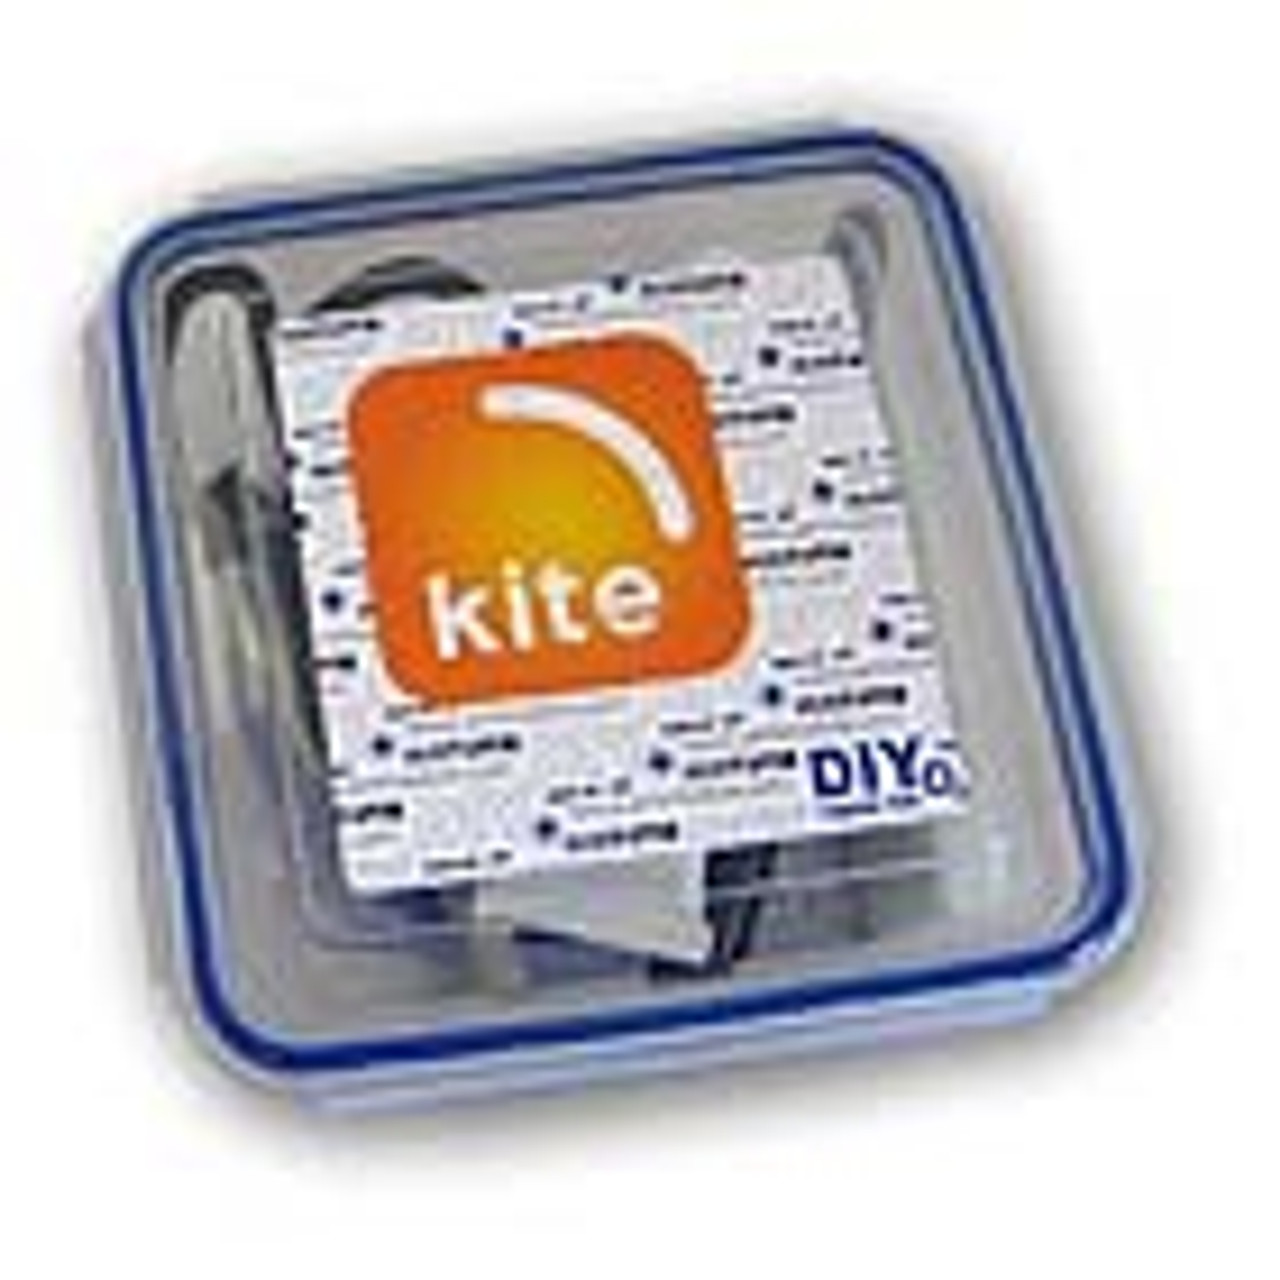 Airtime DIY Kite Repair Kit